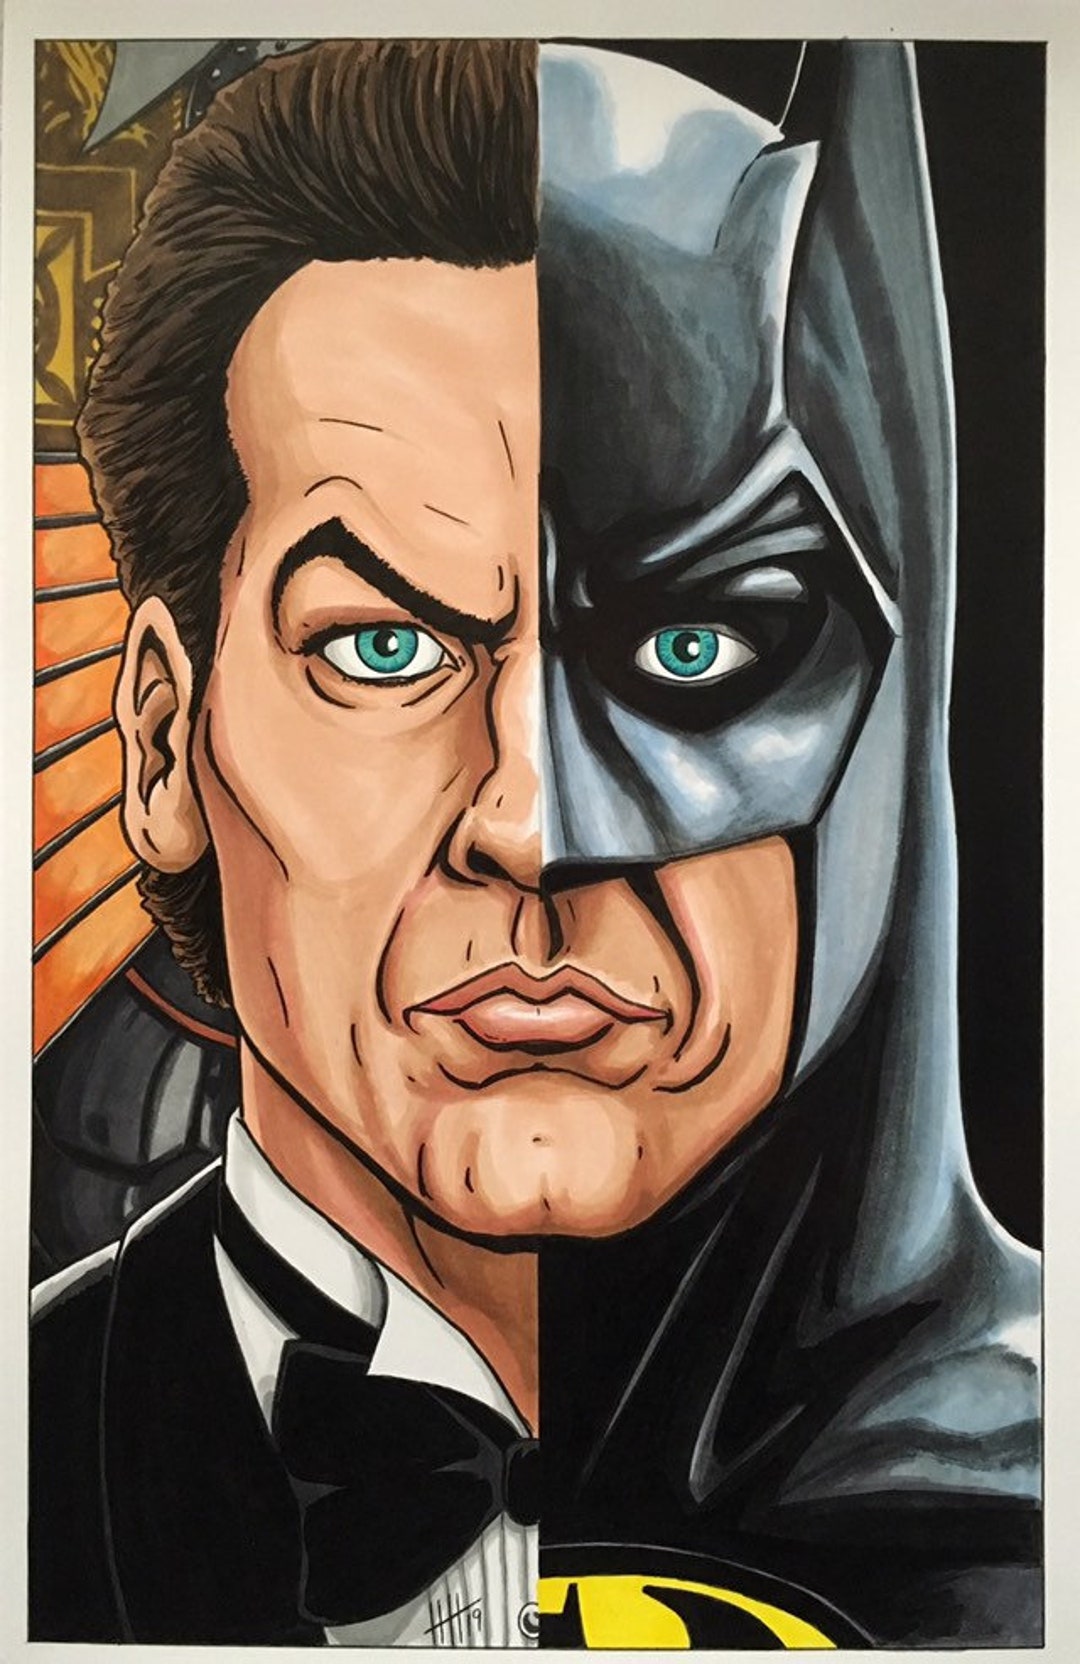 Batman Poster 80th Anniversary 122